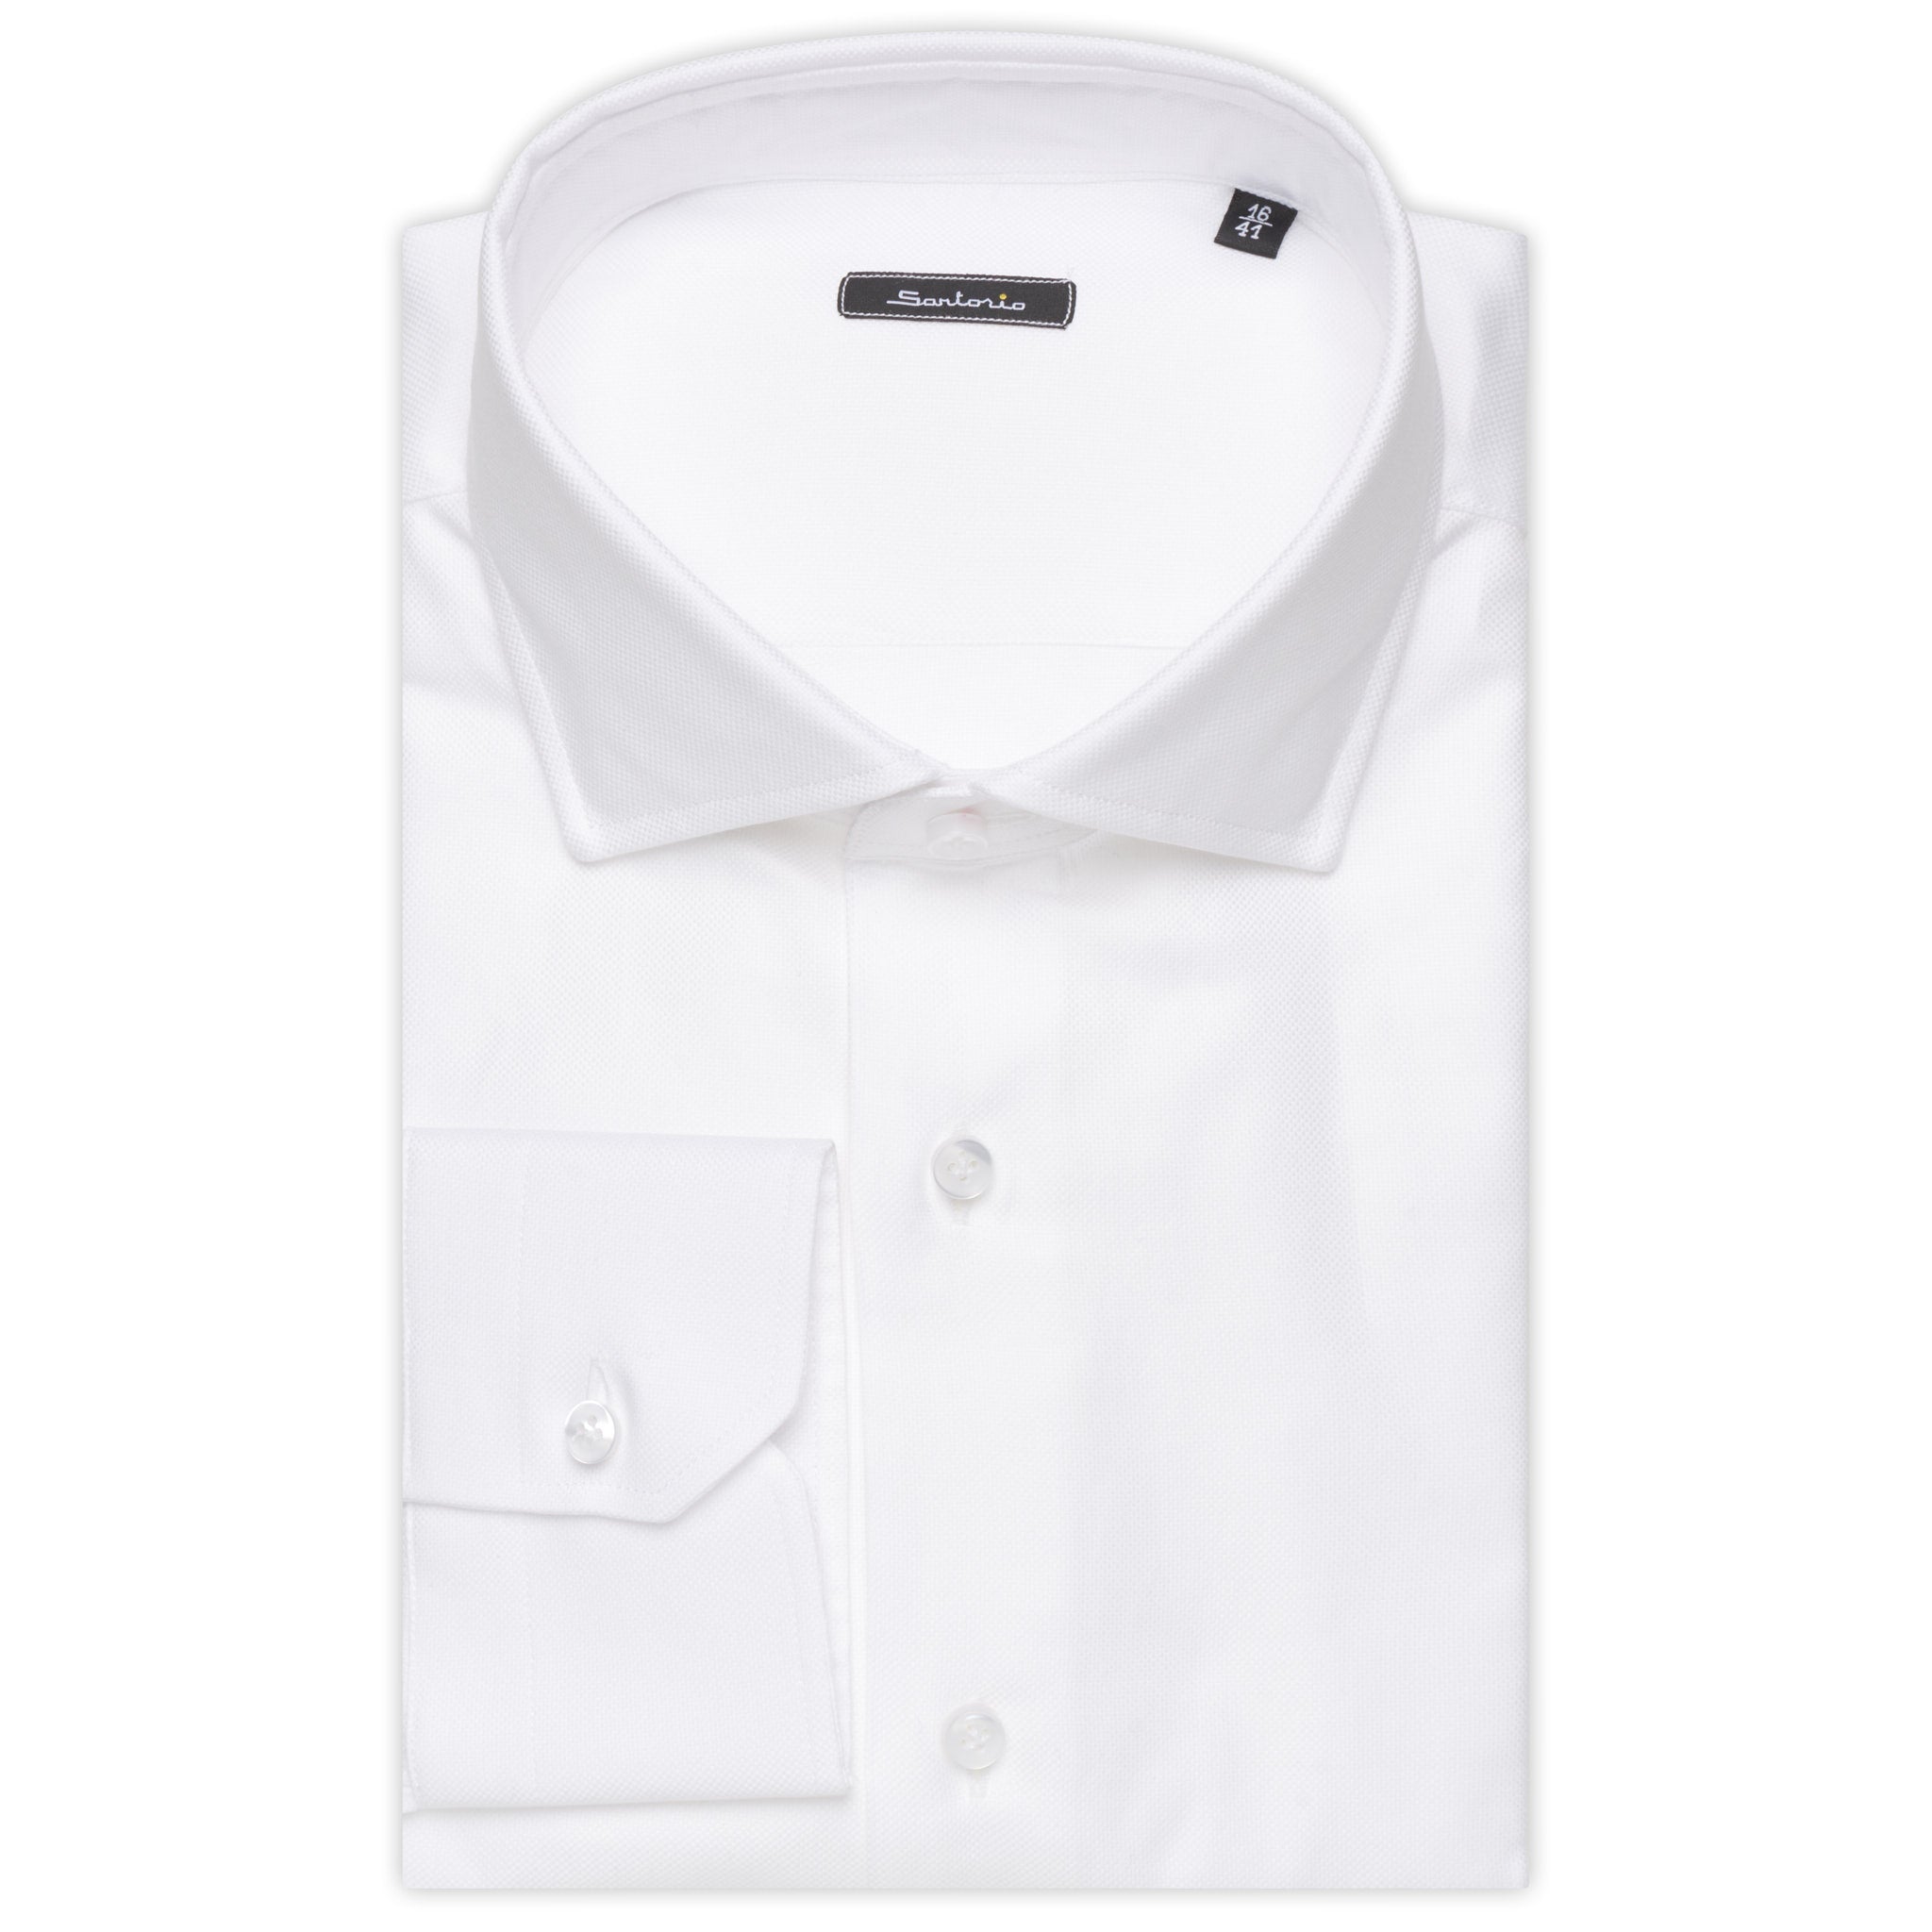 SARTORIO by KITON White Royal Oxford Cotton Dress Shirt NEW Slim Fit